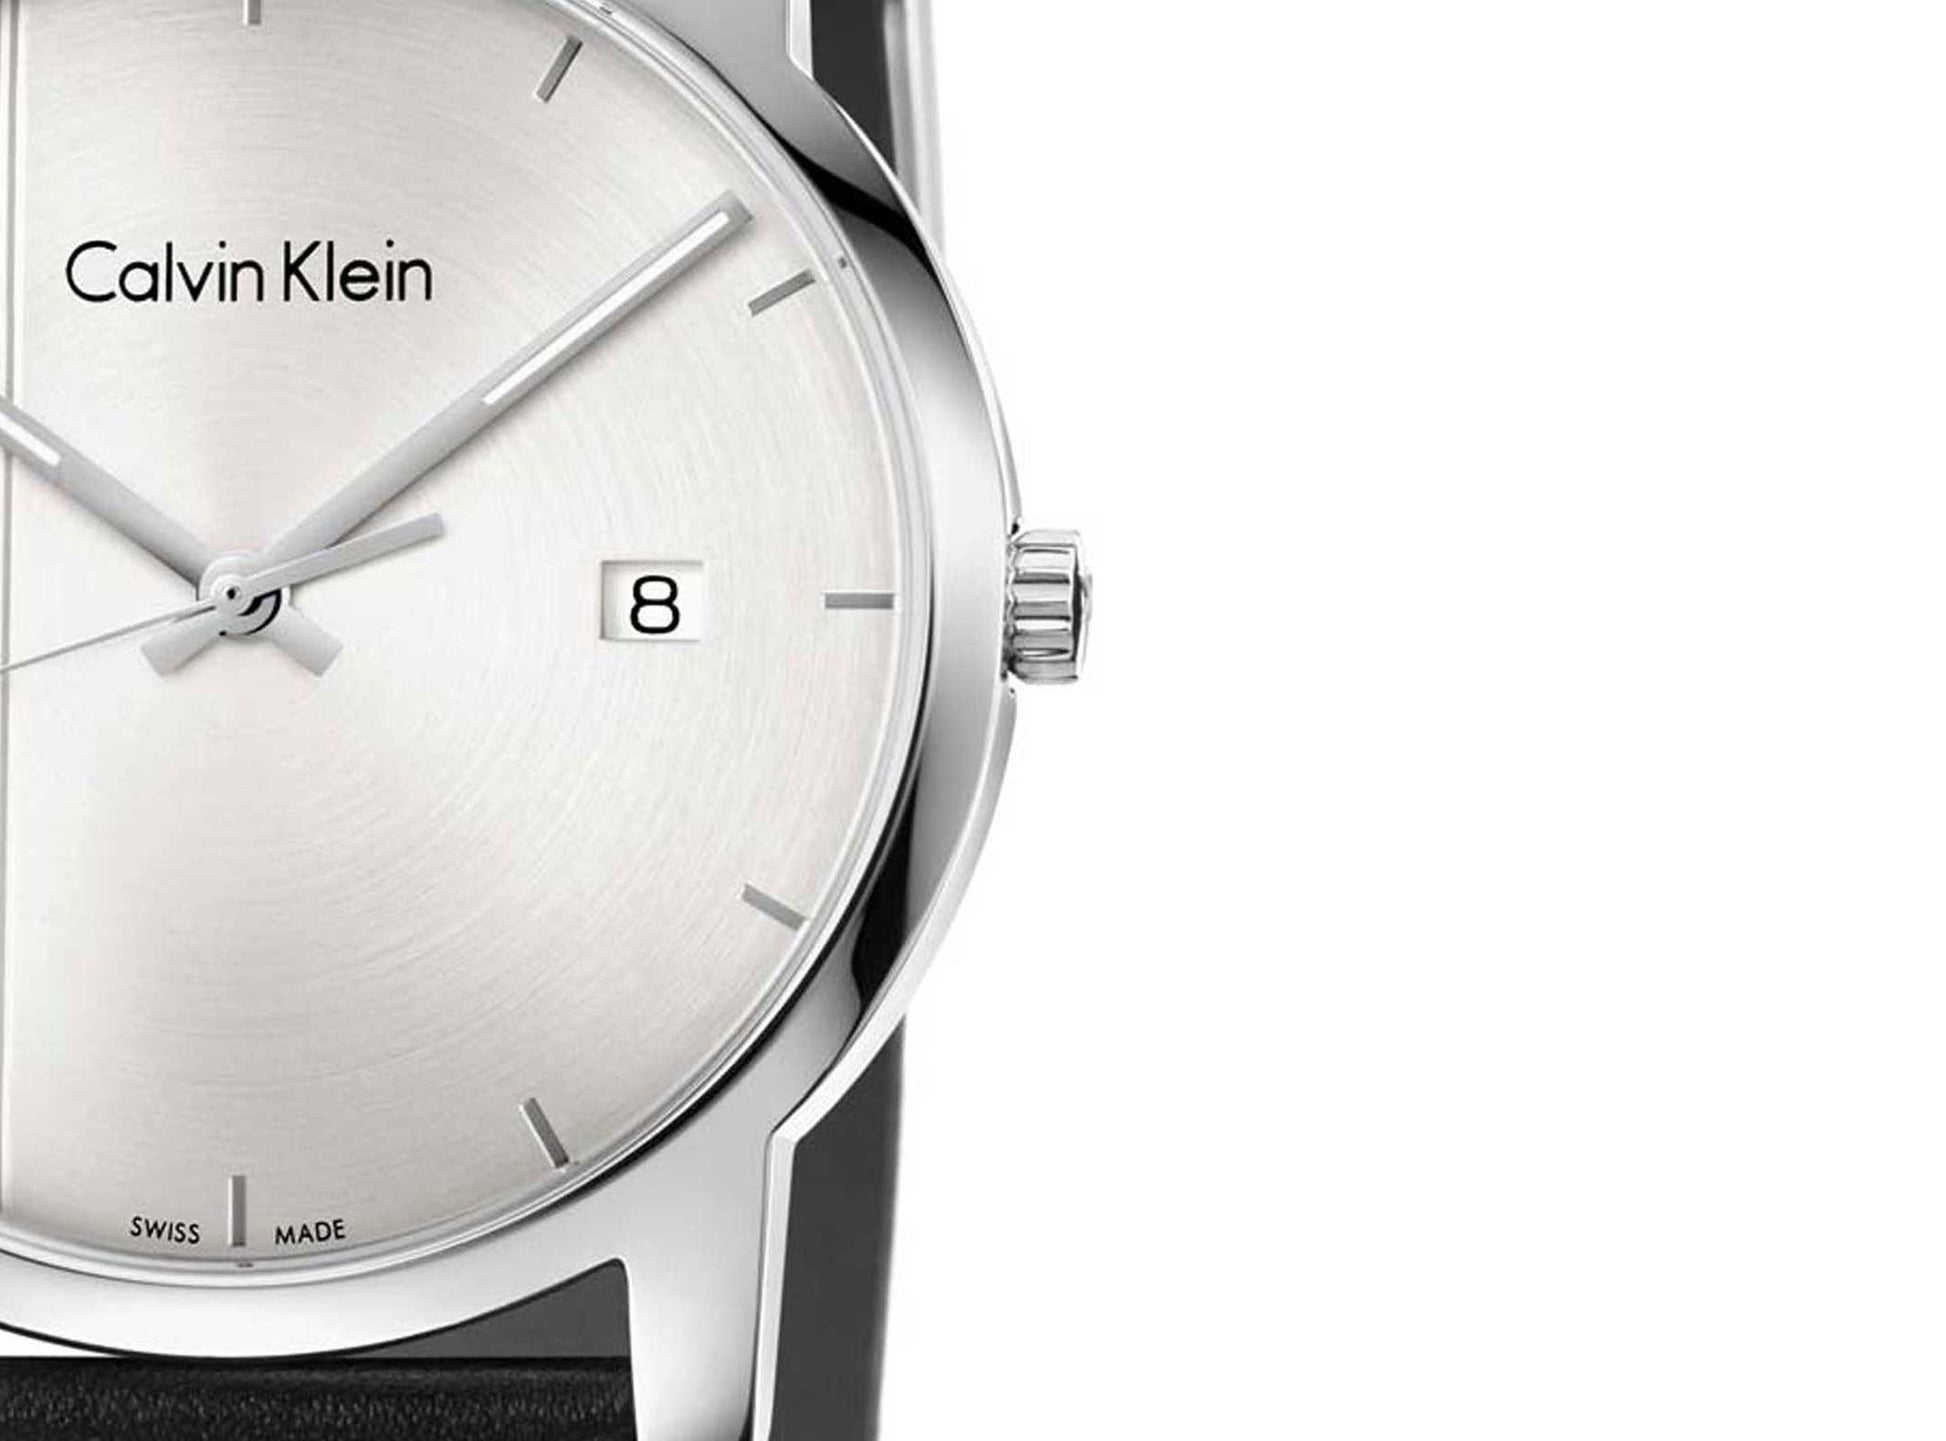 Calvin Klein City White Dial Black Leather Strap Watch for Men - K2G2G1CD